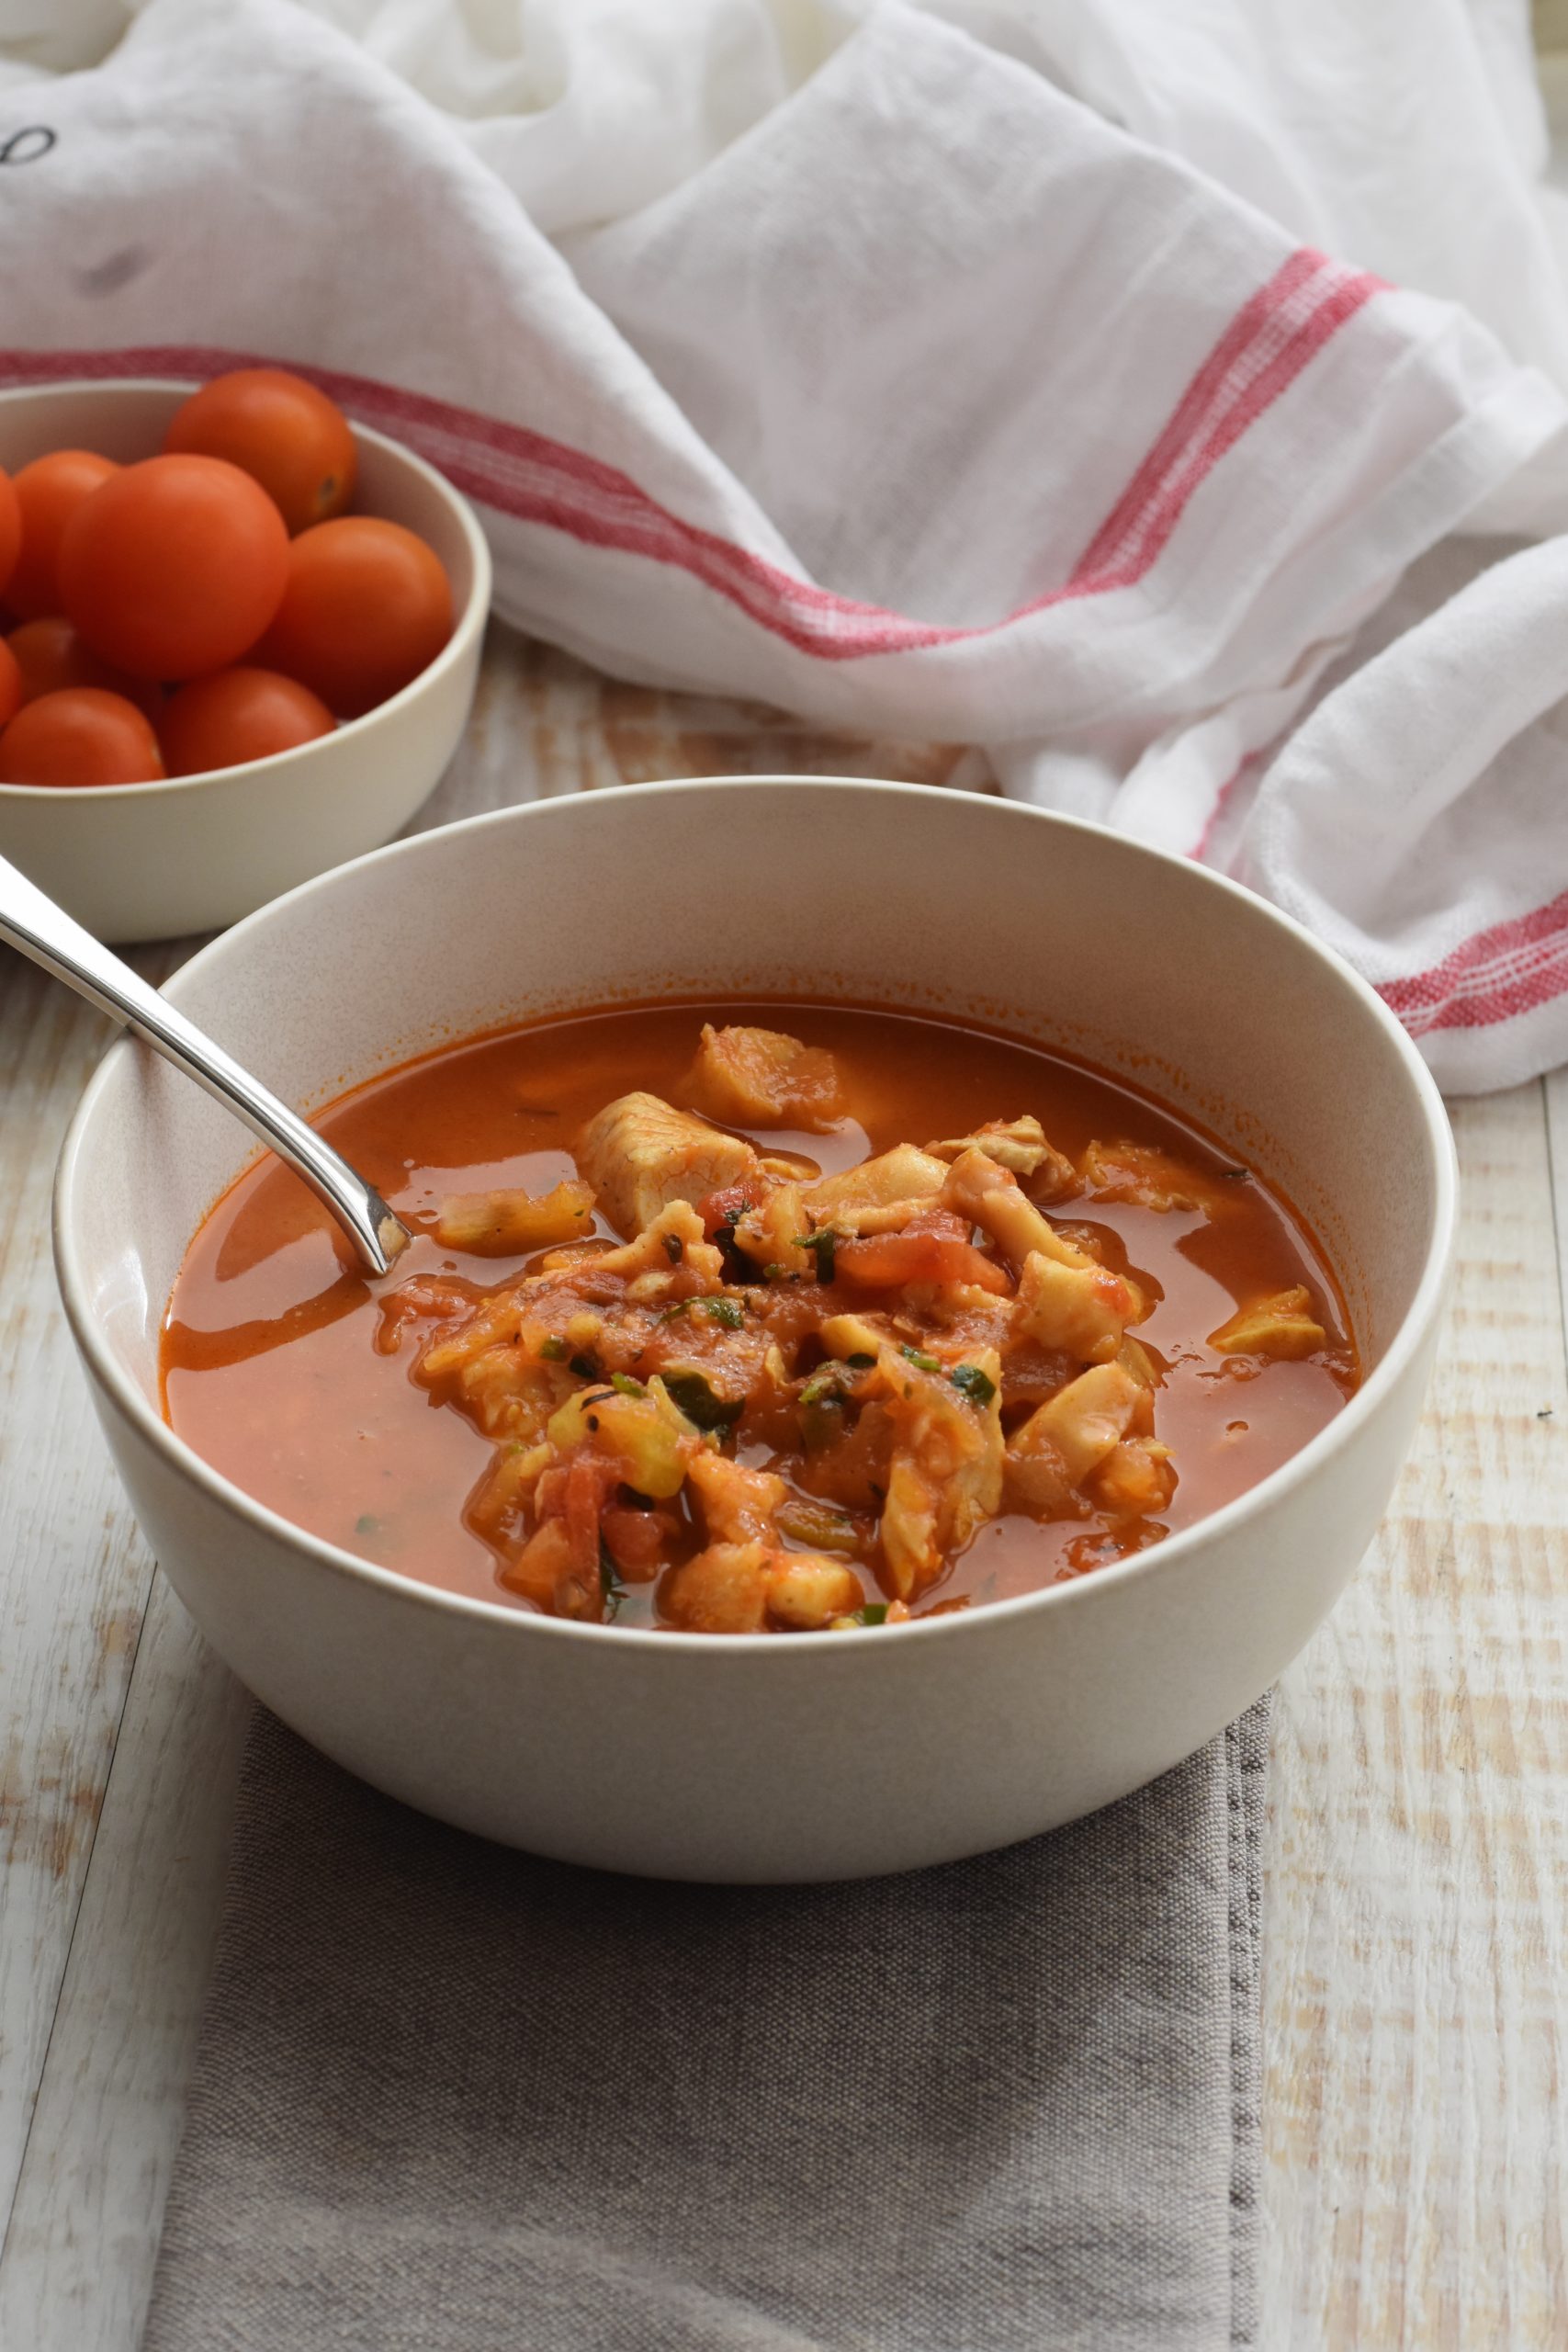 Featured image for “Mediterranean Fish Stew”